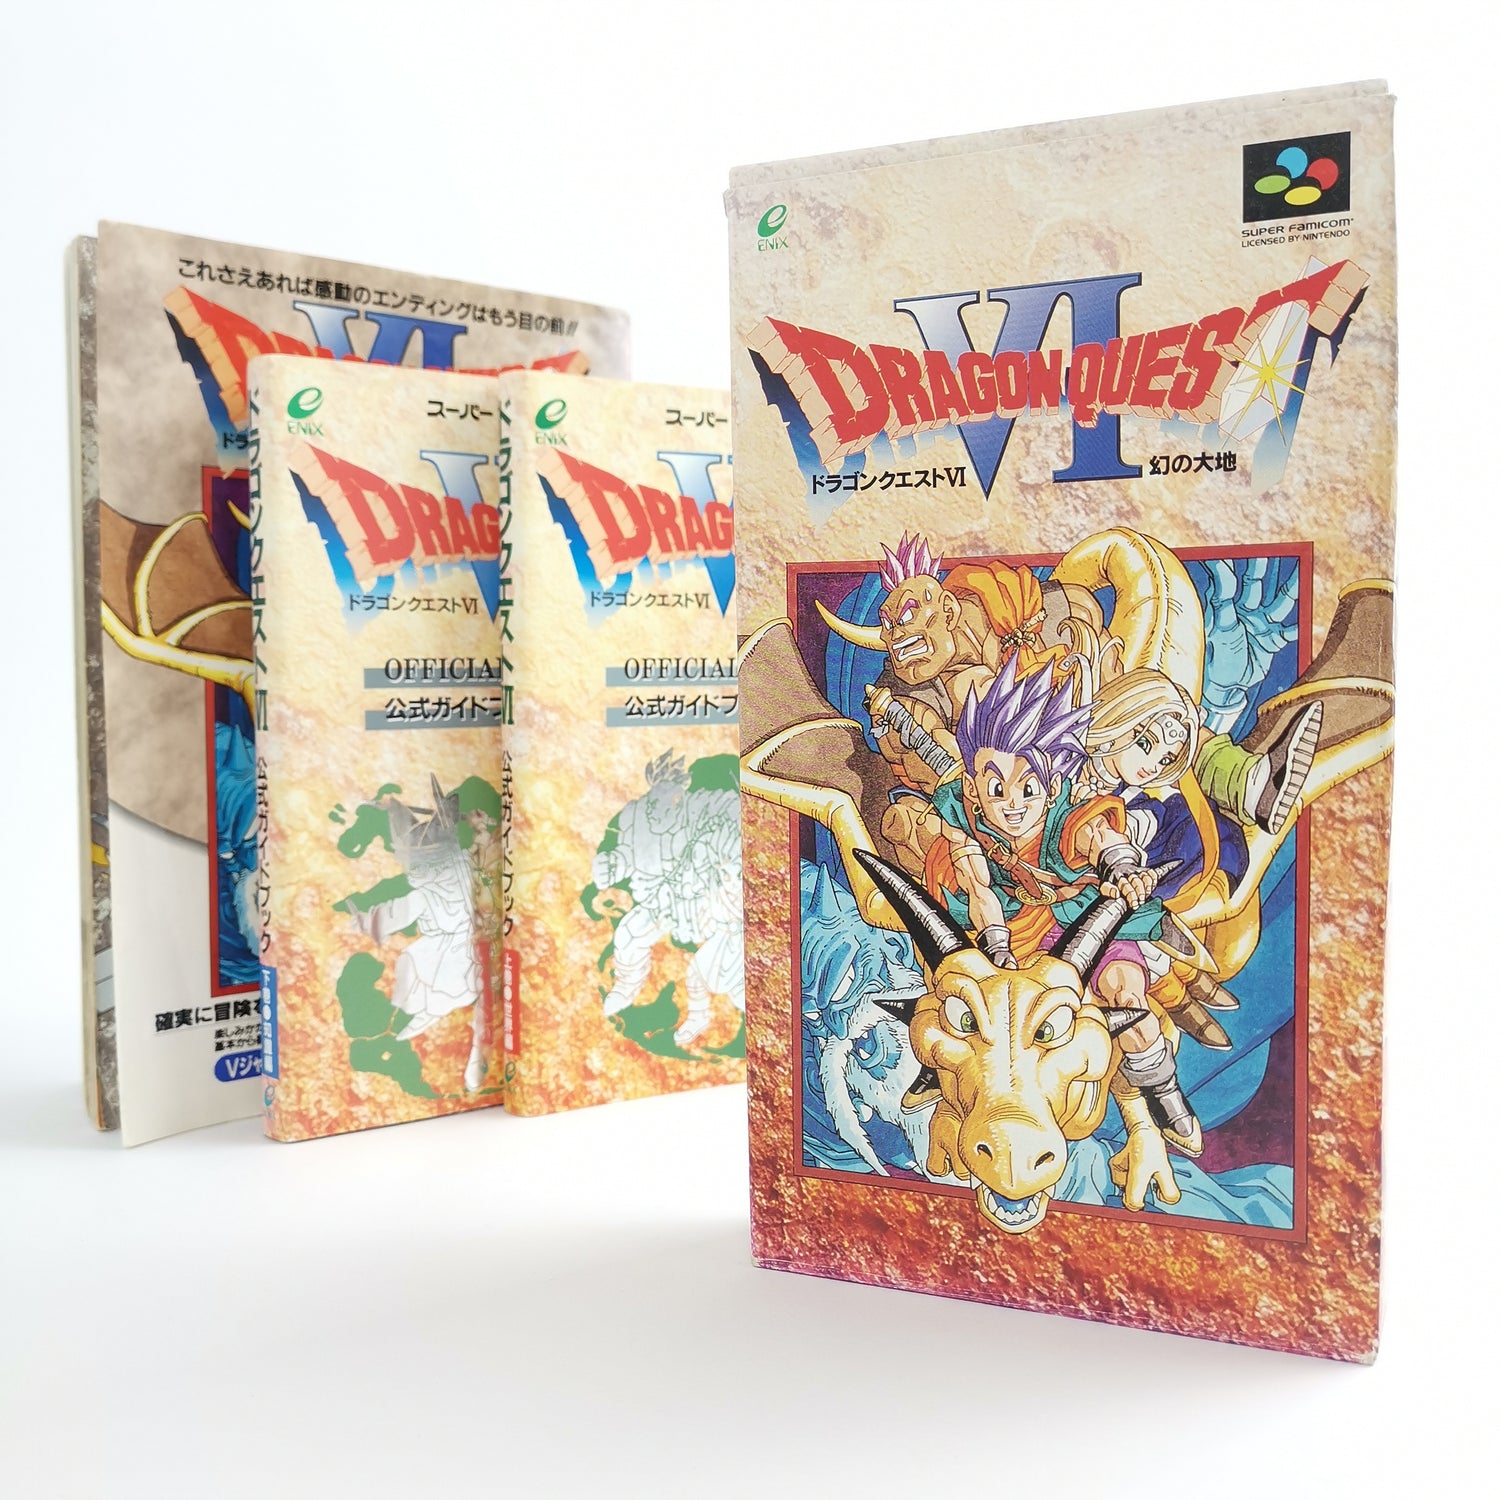 Nintendo Super Famicom SNES Spiel : Dragon Quest VI + 3 Jap. Guide Book SNES OVP